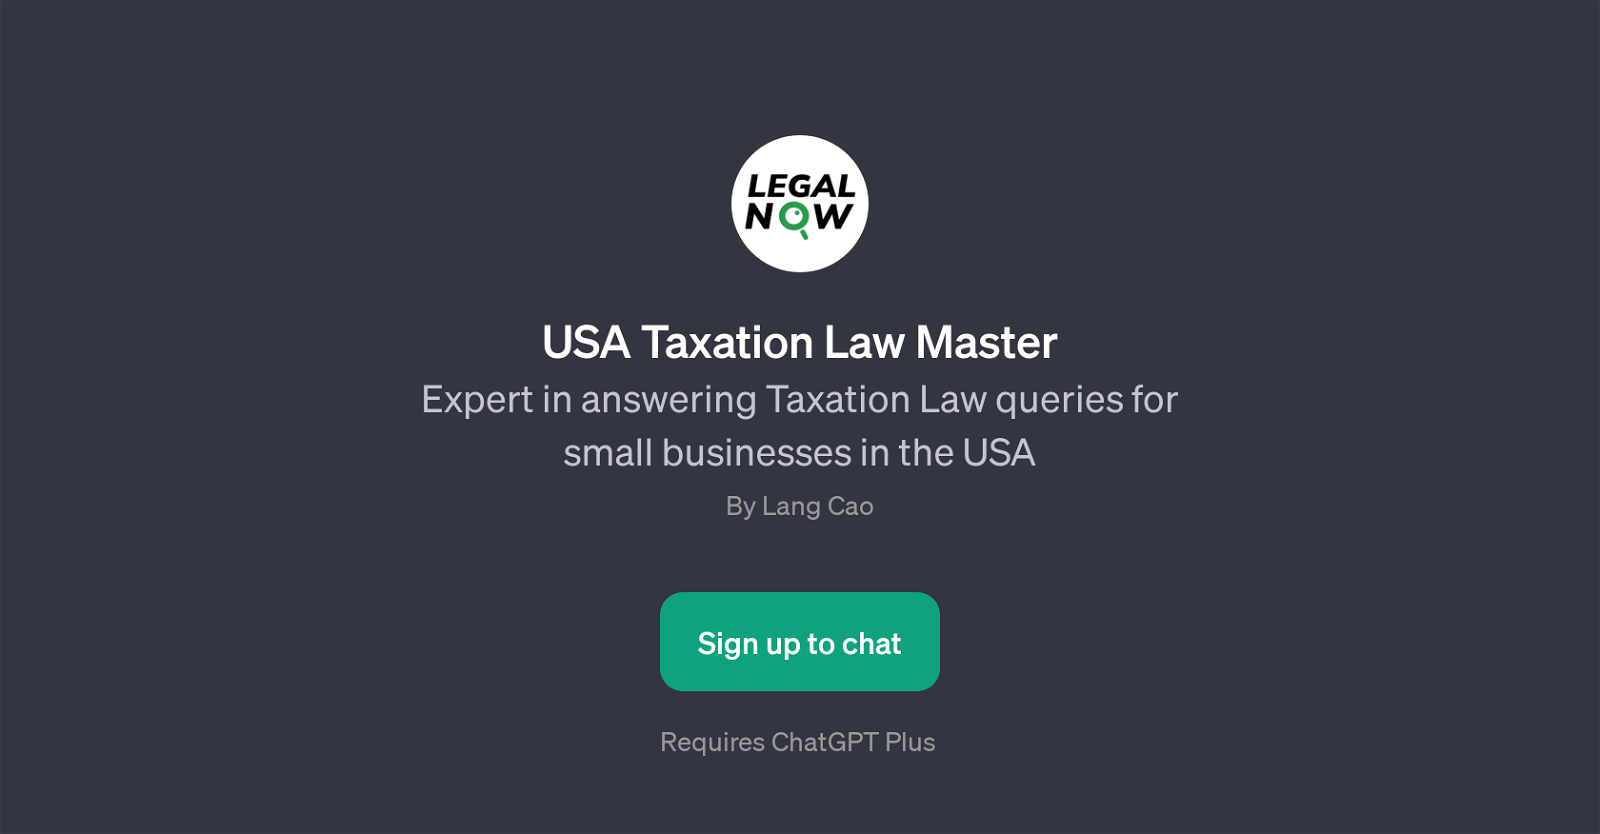 USA Taxation Law Master website